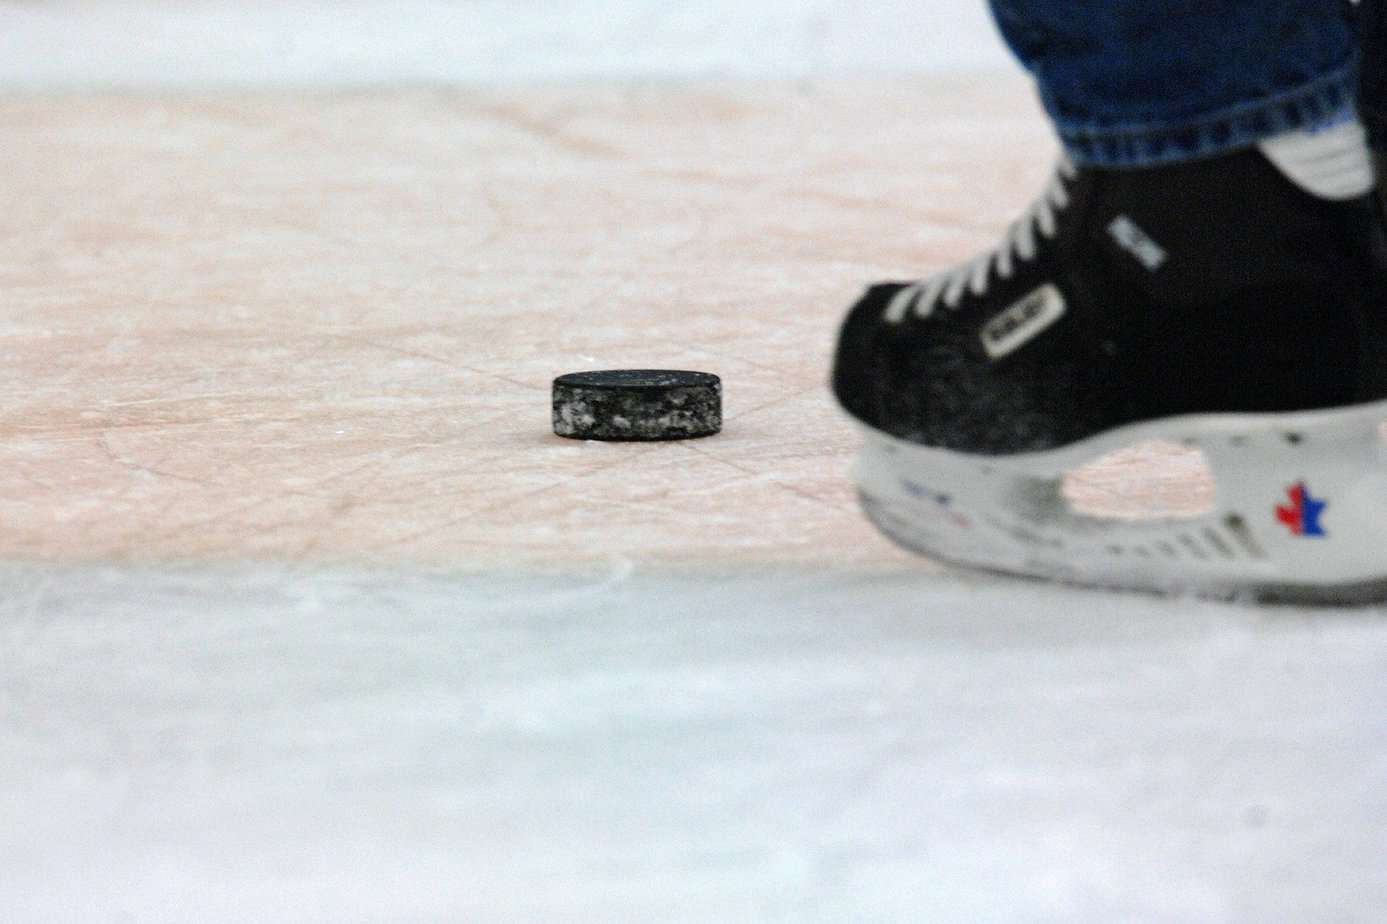 How Often Should You Sharpen Your Hockey Skates? This Often!